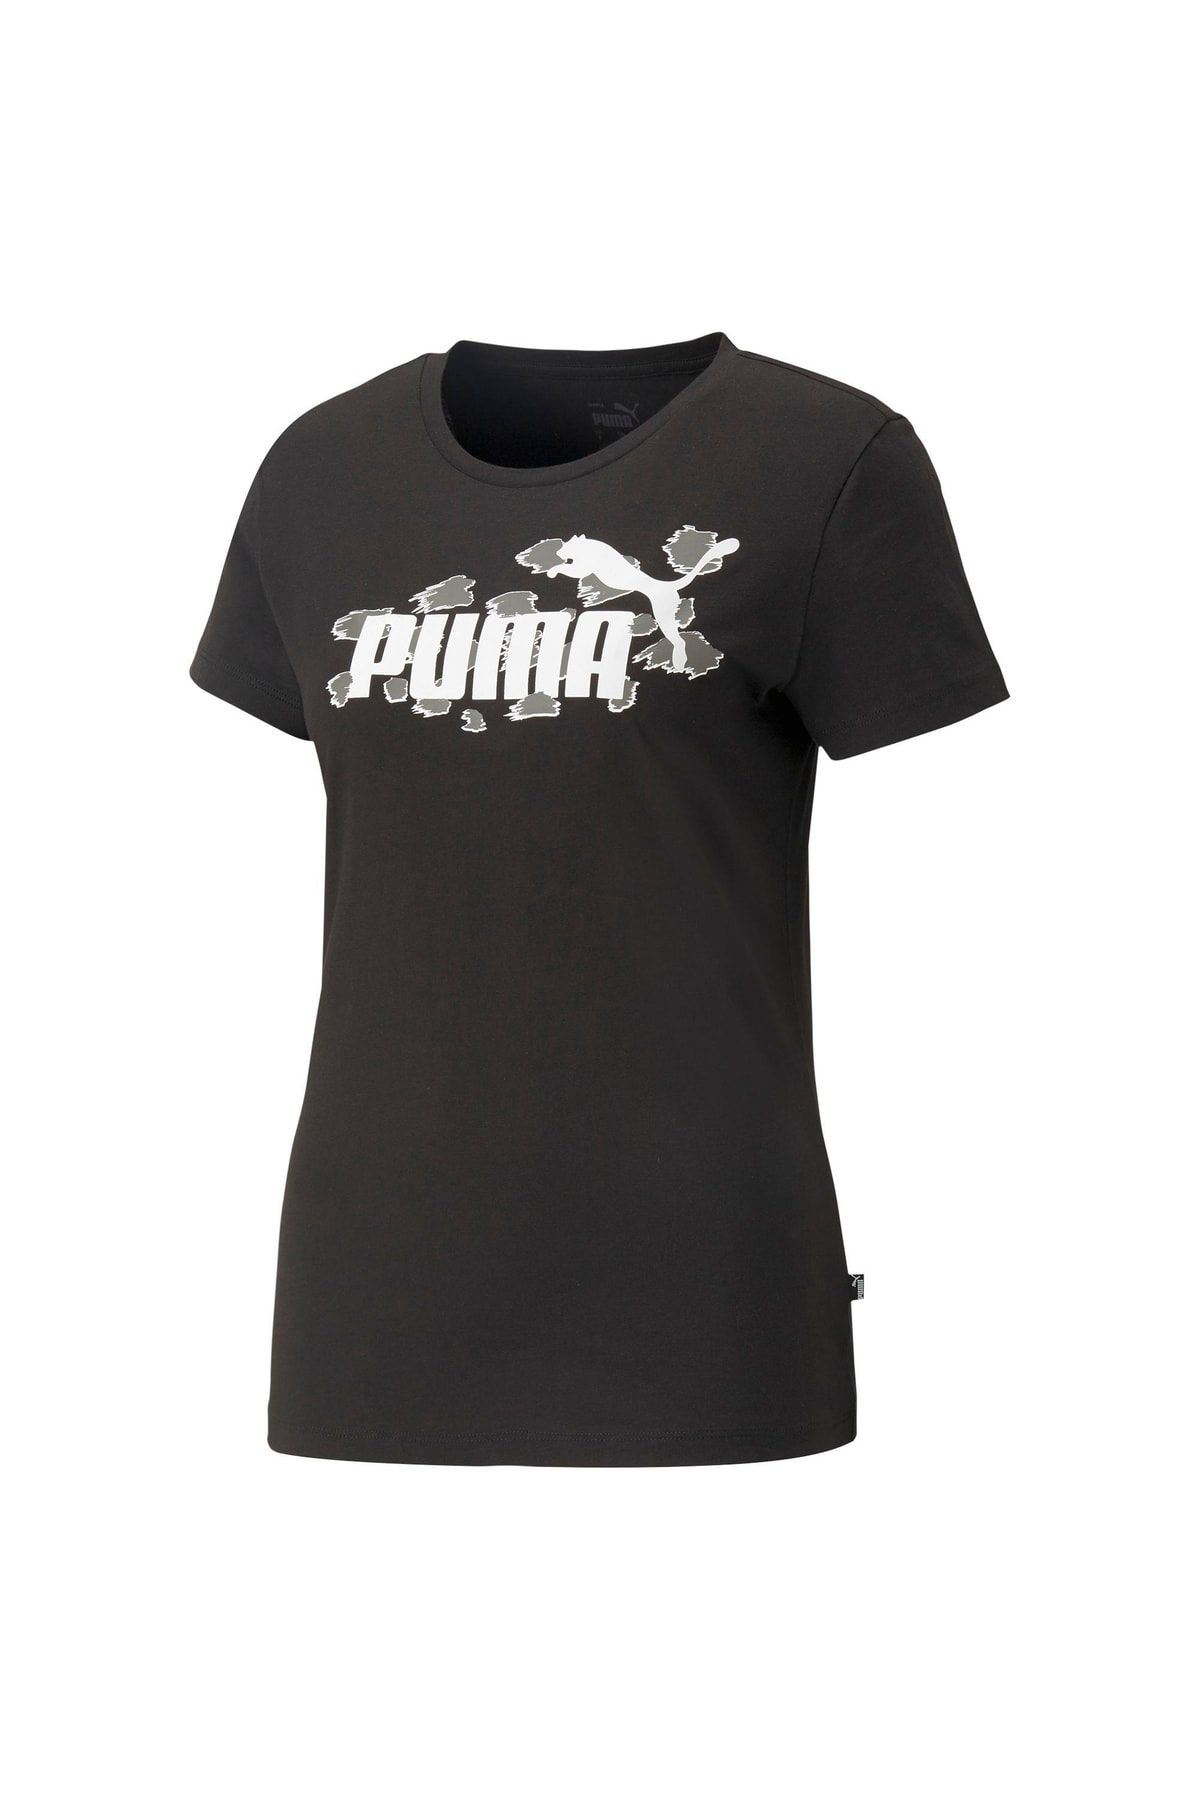 Puma Ess+ Animal Tee - Women\'s Black T-Shirt - Trendyol